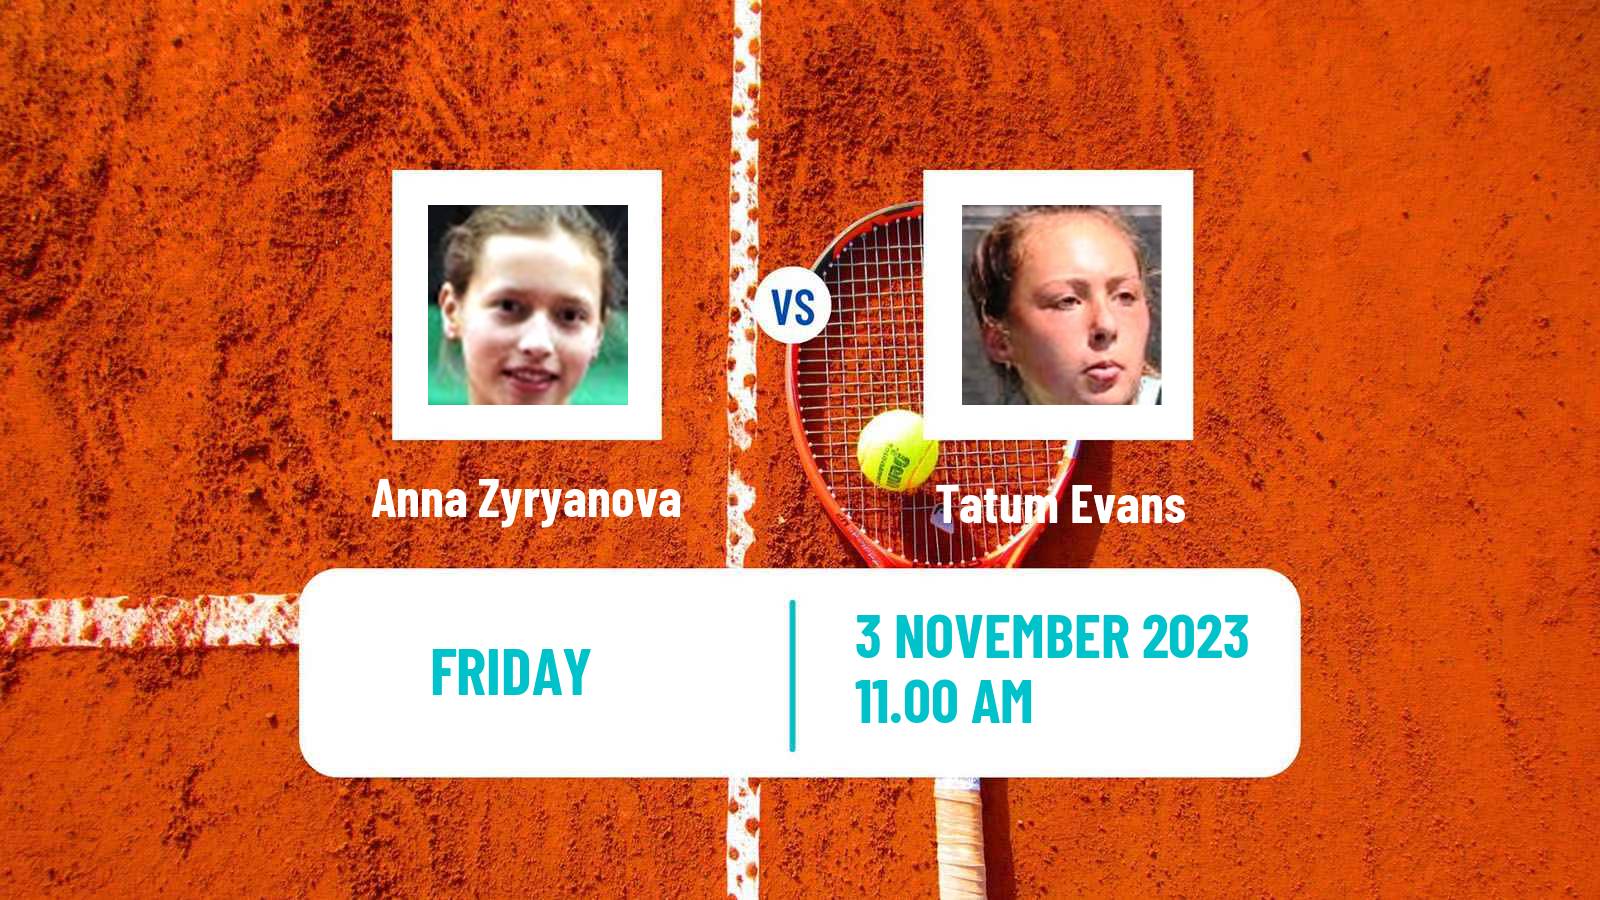 Tennis ITF W15 Norman Ok Women Anna Zyryanova - Tatum Evans